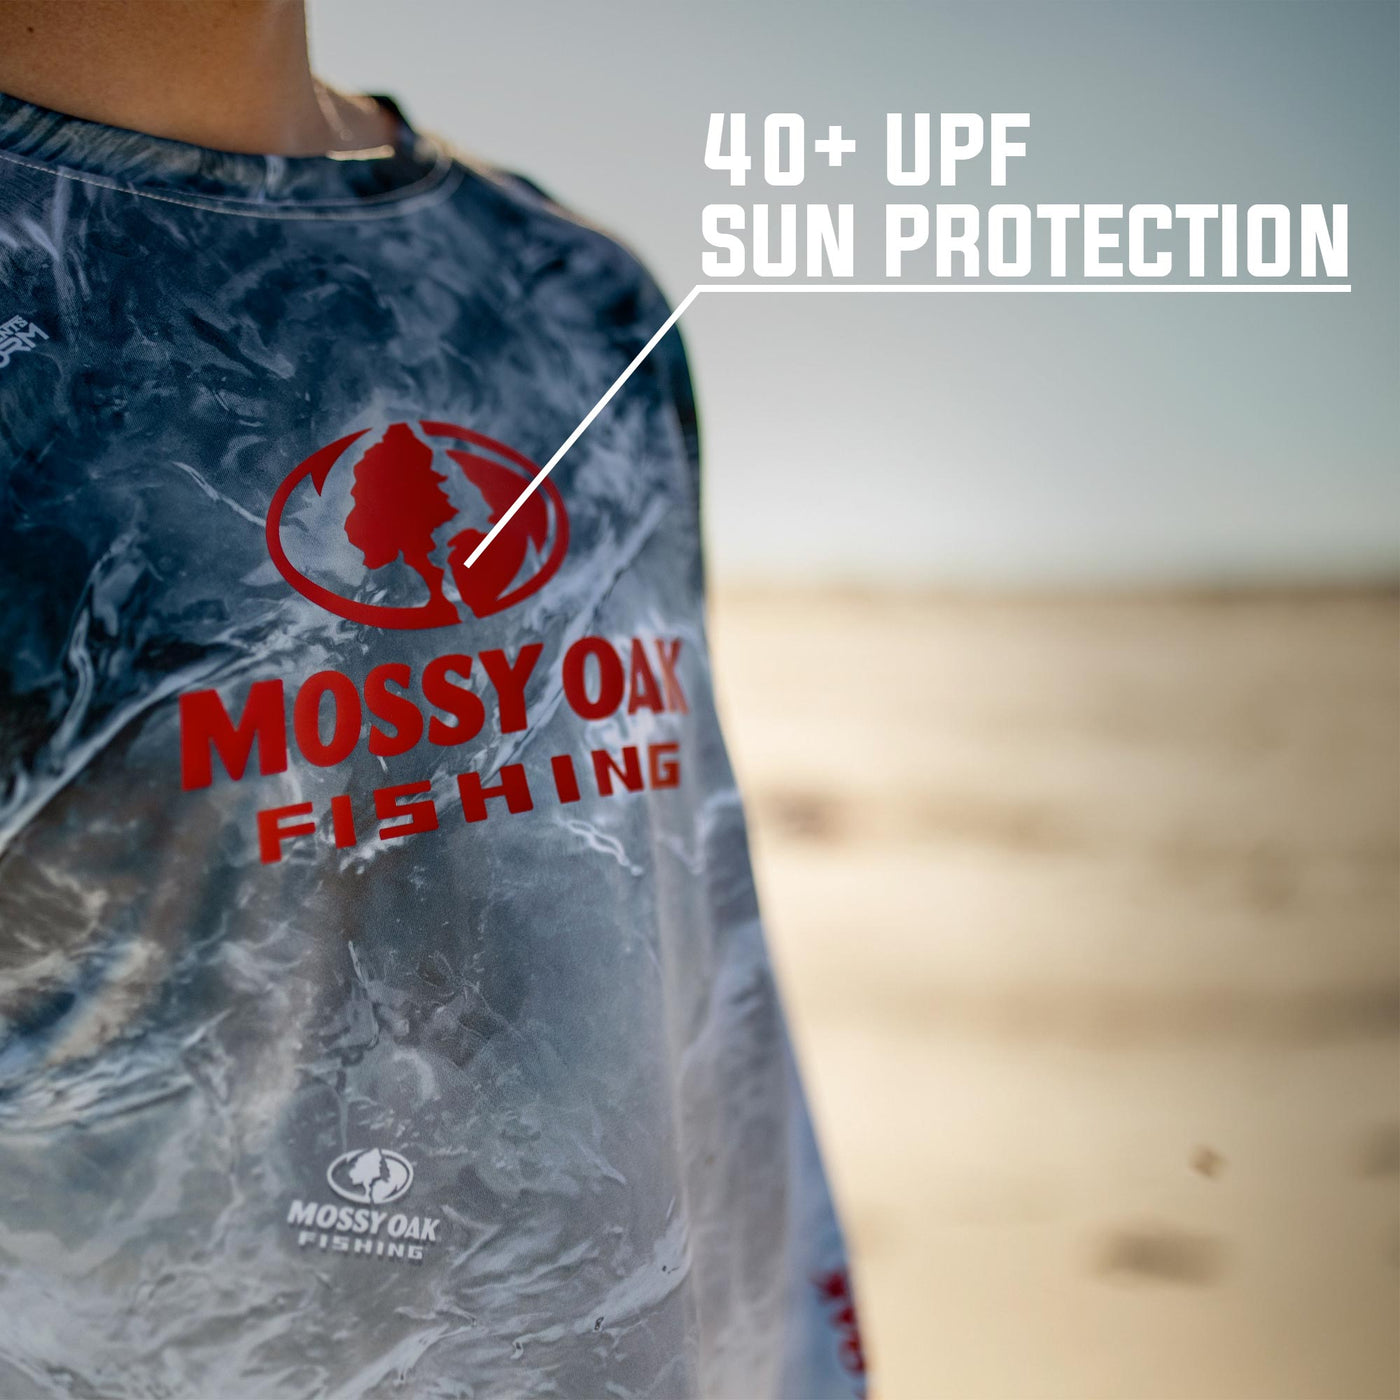 Mossy Oak Fishing Red, White & Blue Tech Long Sleeve Shirt 40+ UPF Sun Protection